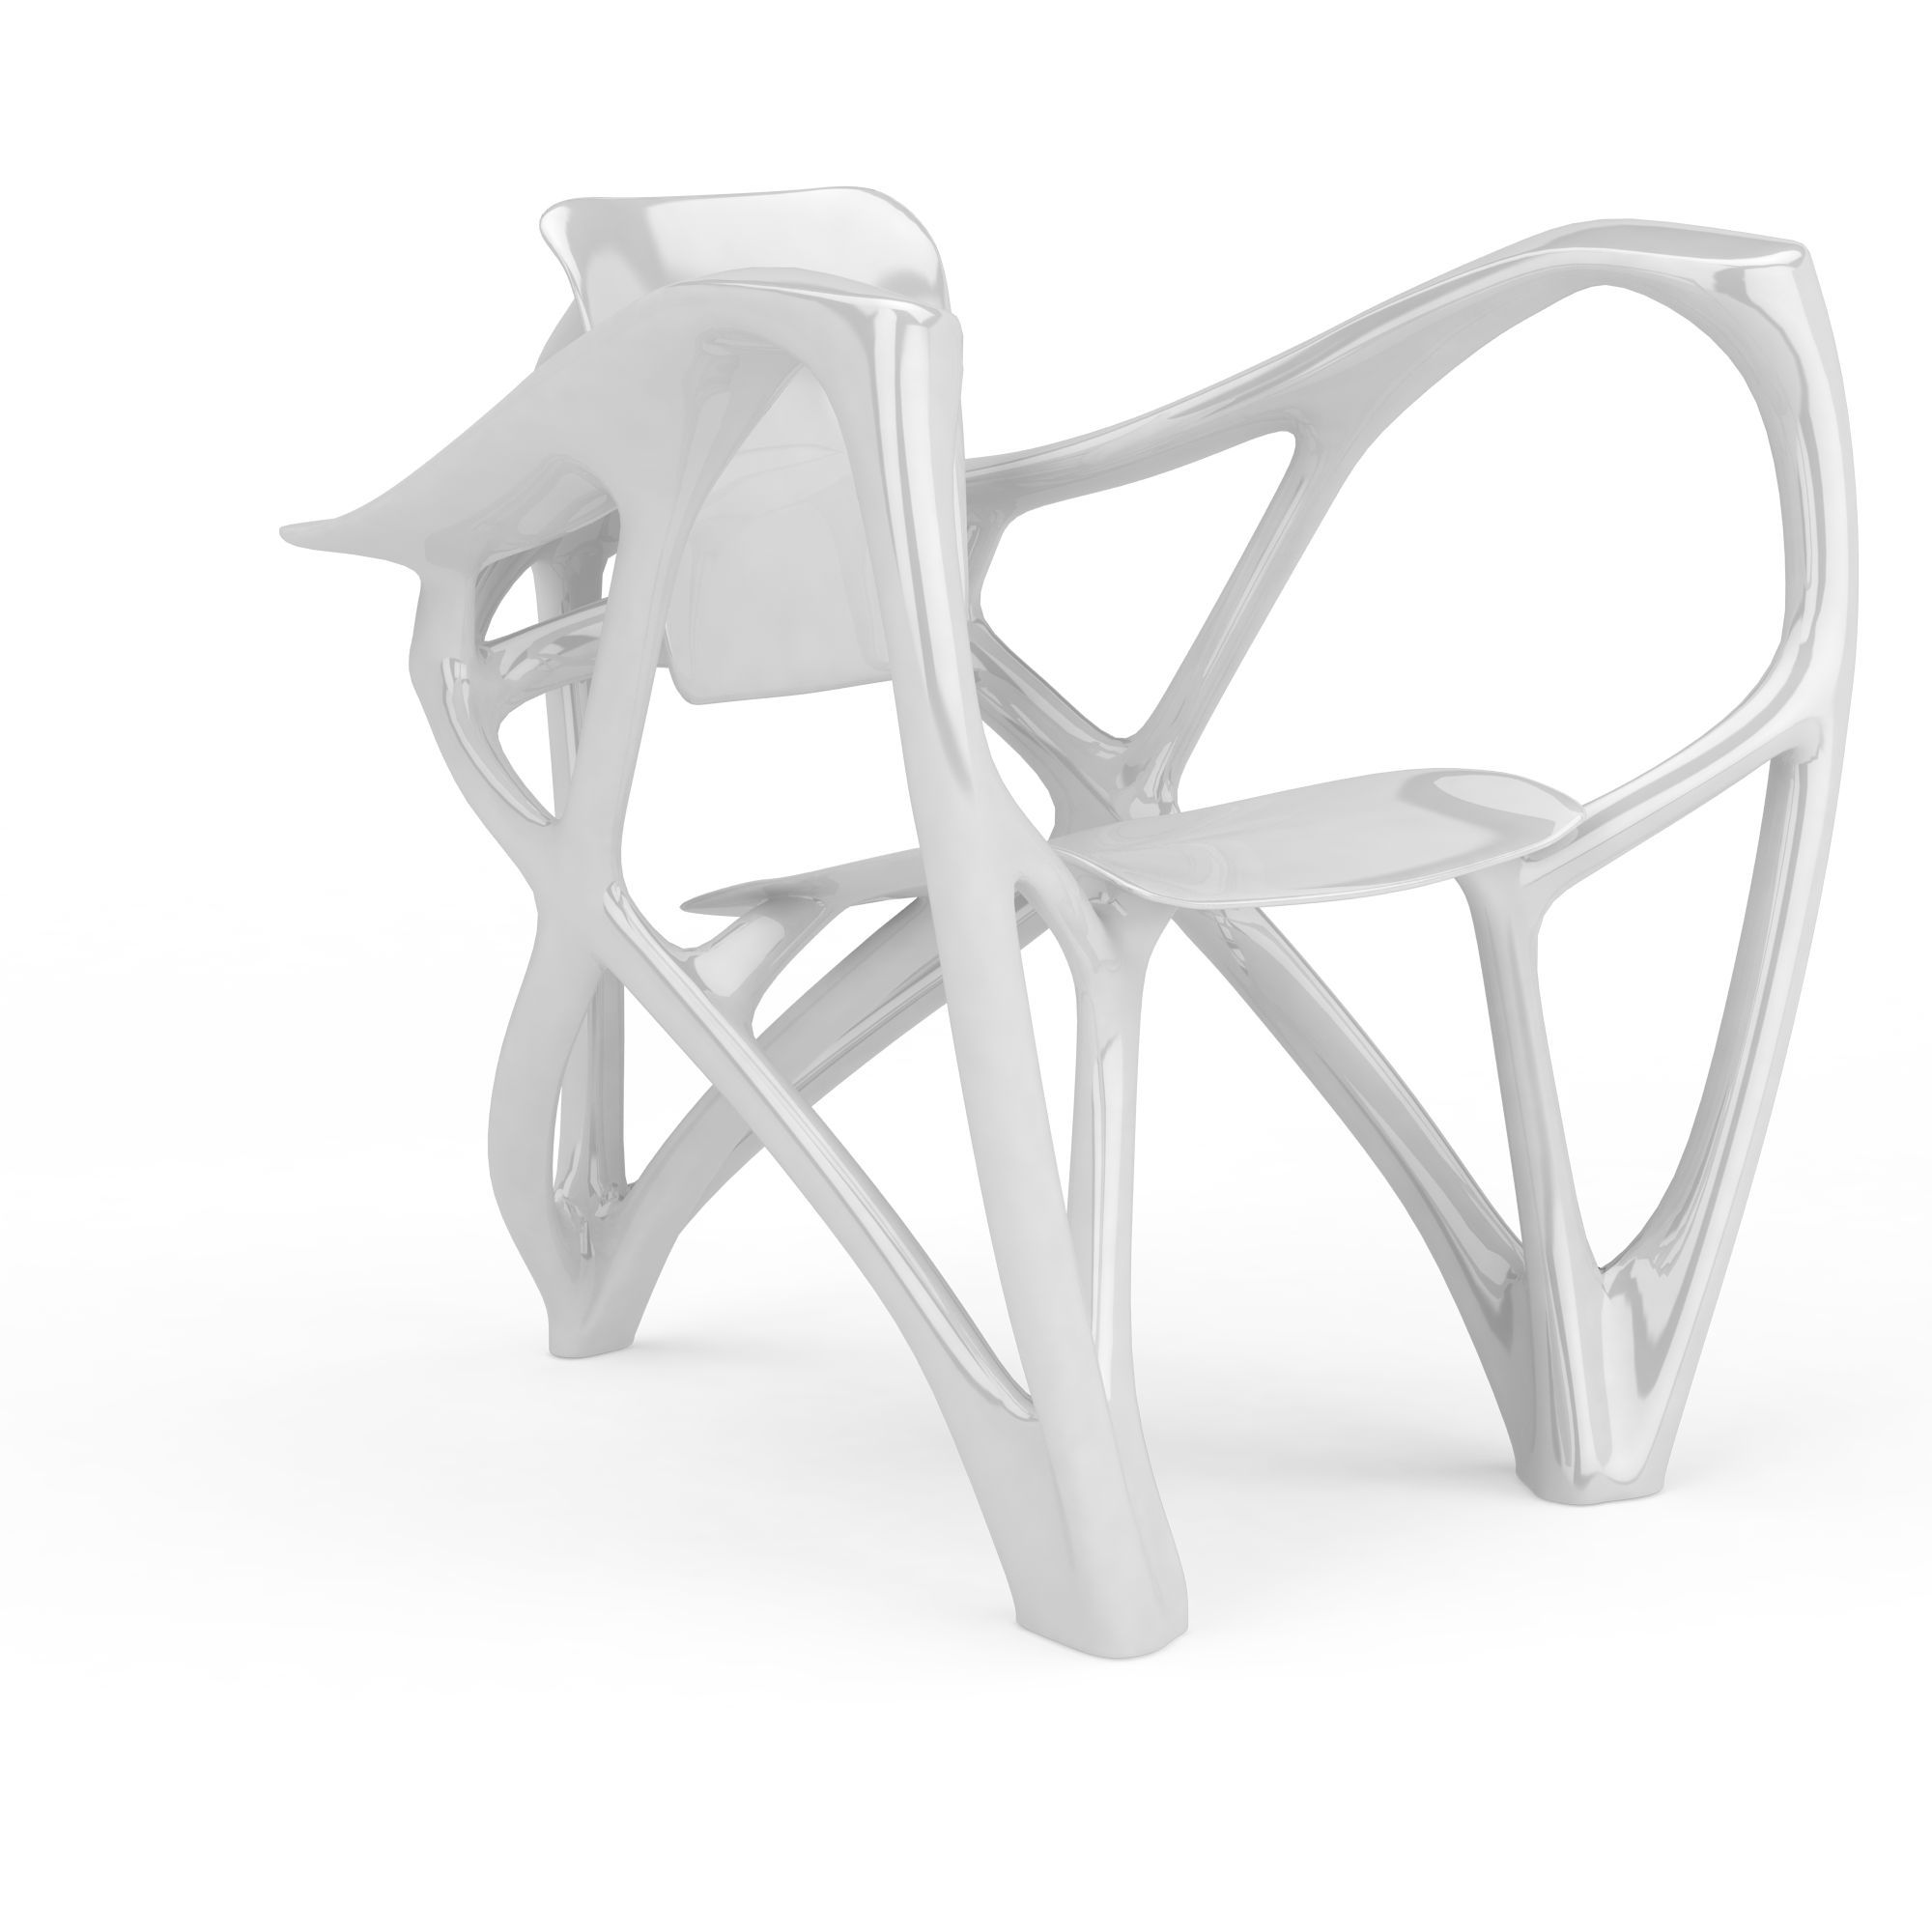 sinuo chair你绝对意想不到的创意椅子 - 普象网